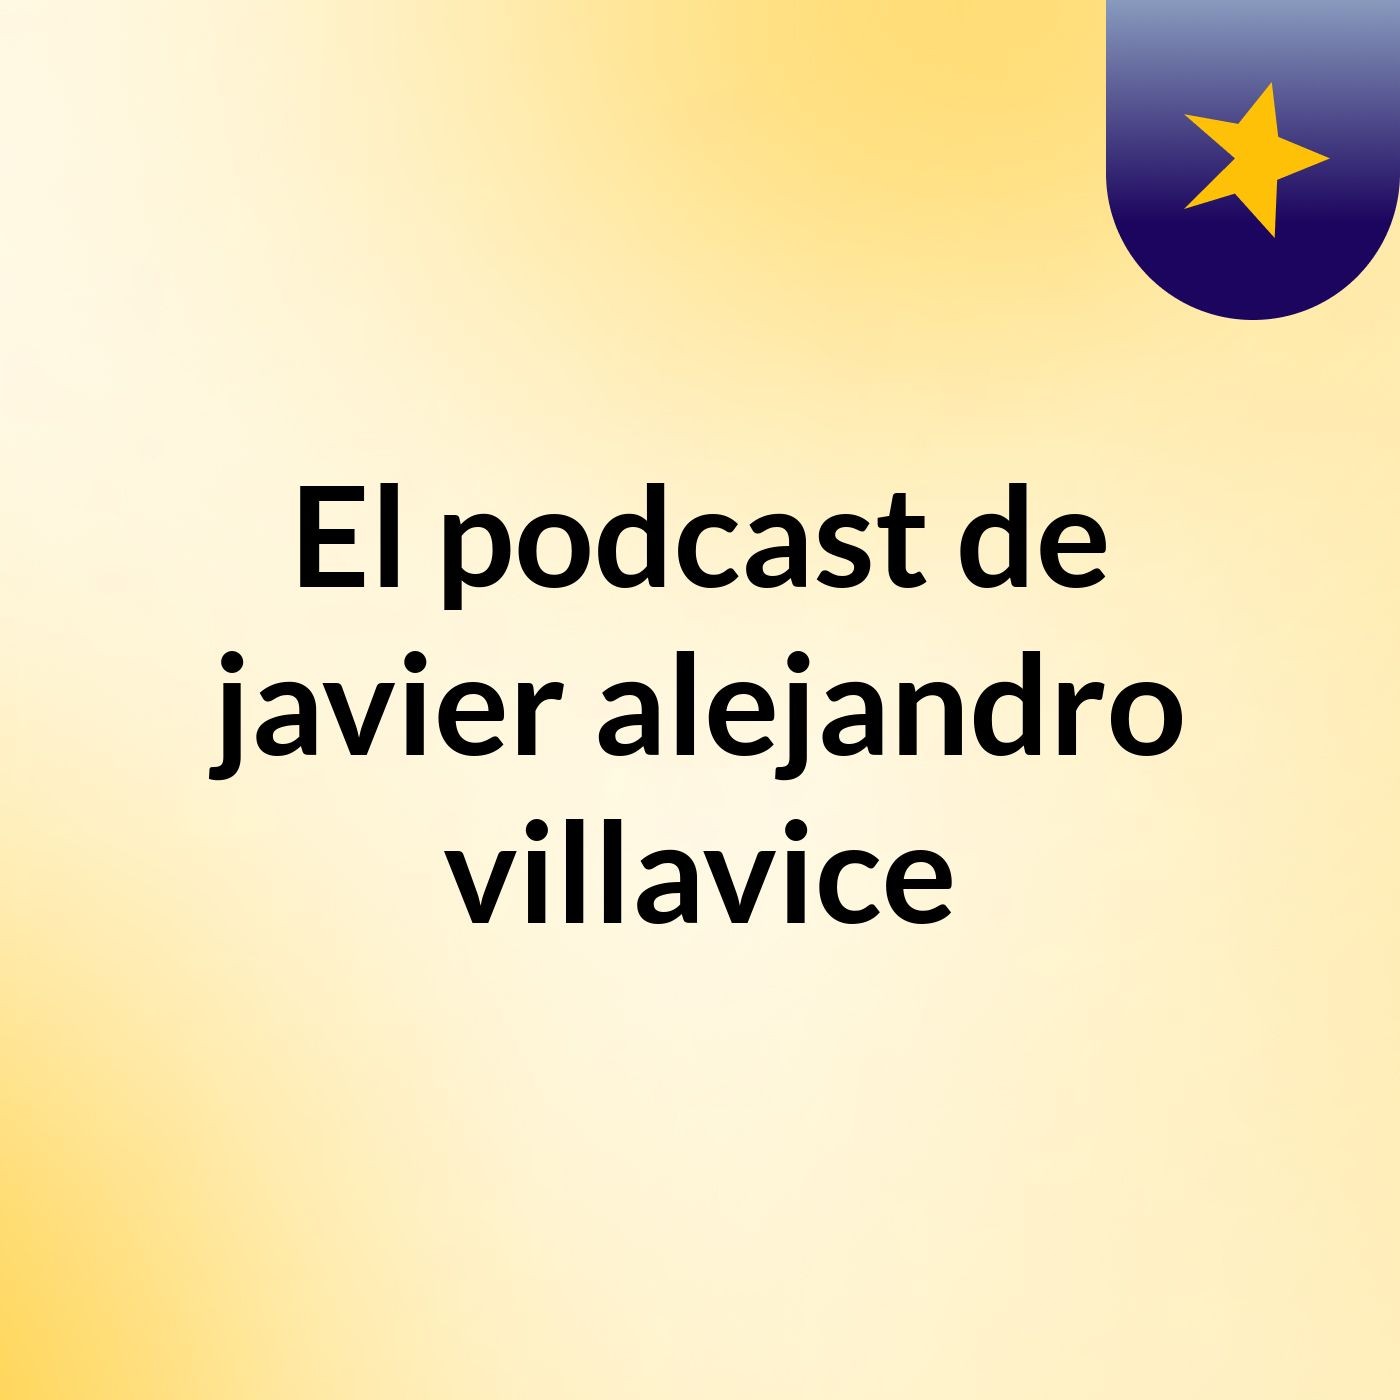 El podcast de javier alejandro villavice